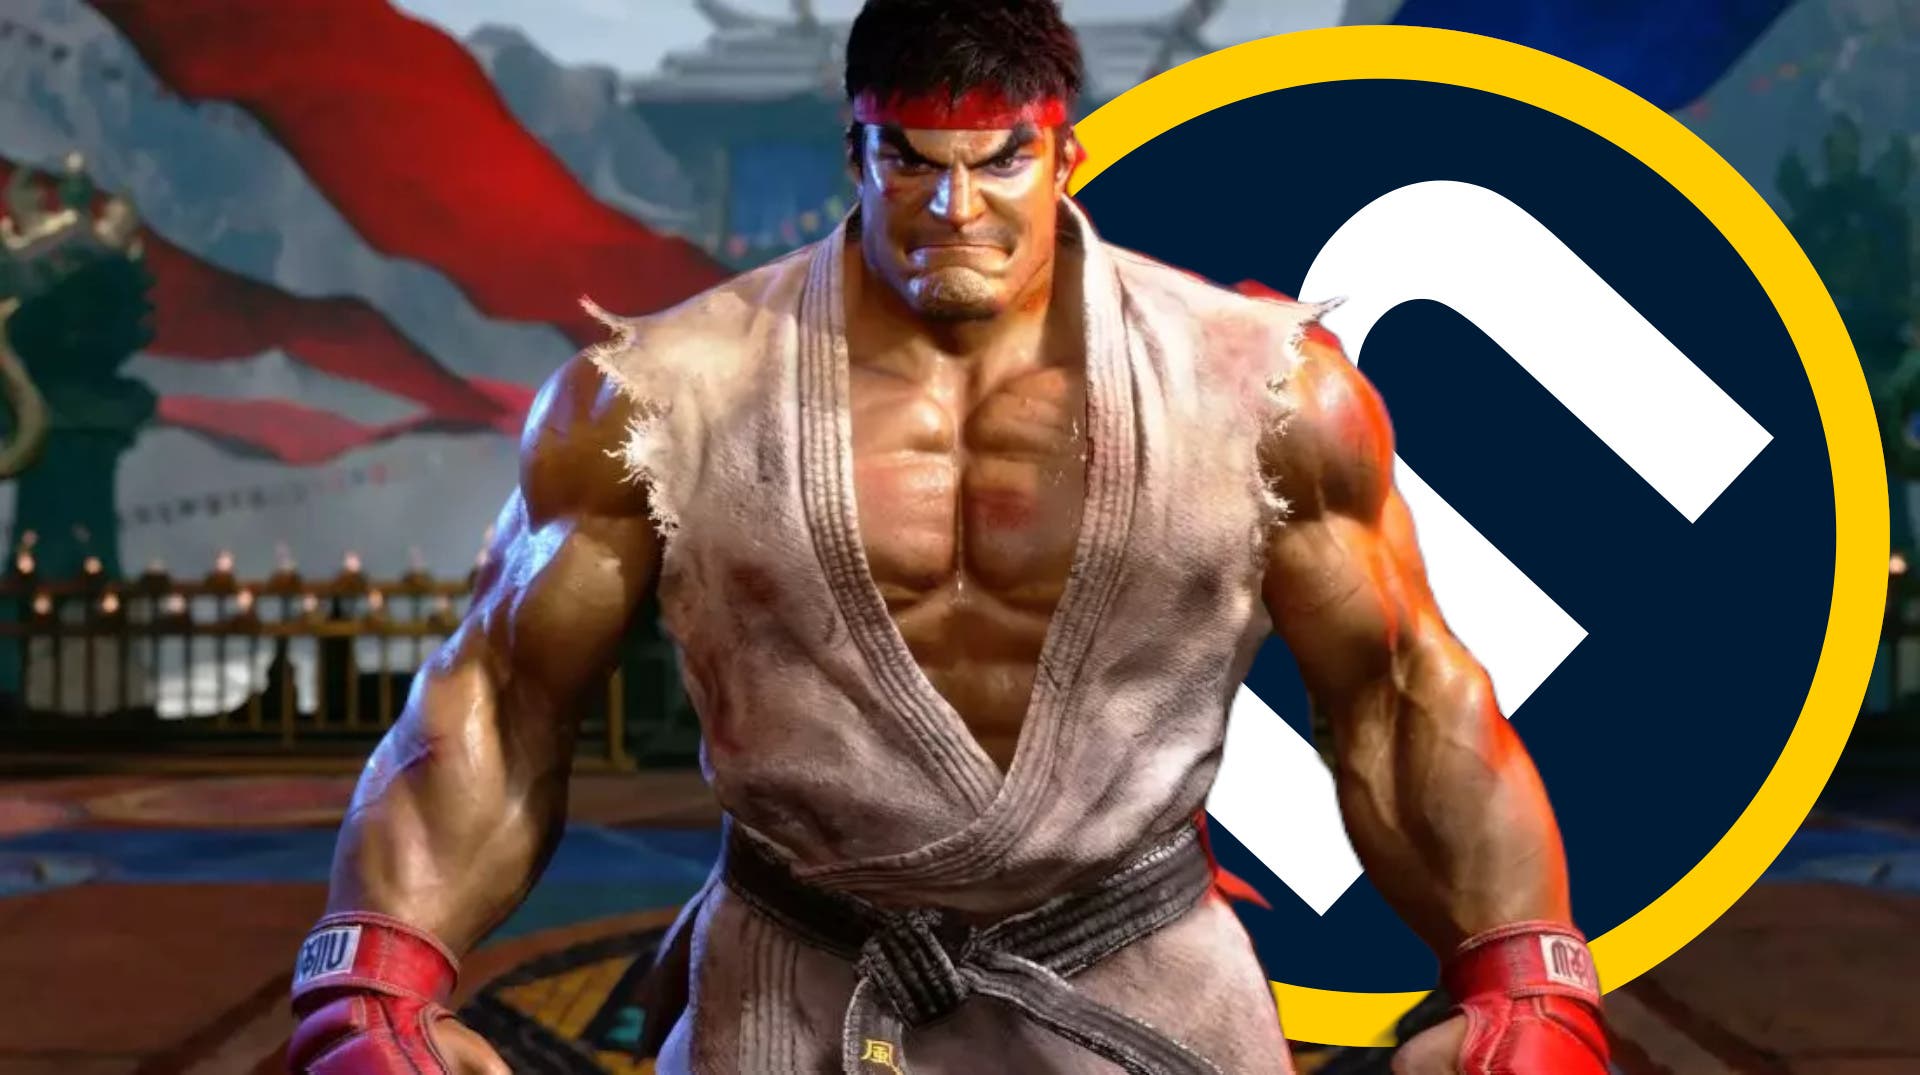 El increíble puntaje de Street Fighter 6 en Metacritic - TyC Sports